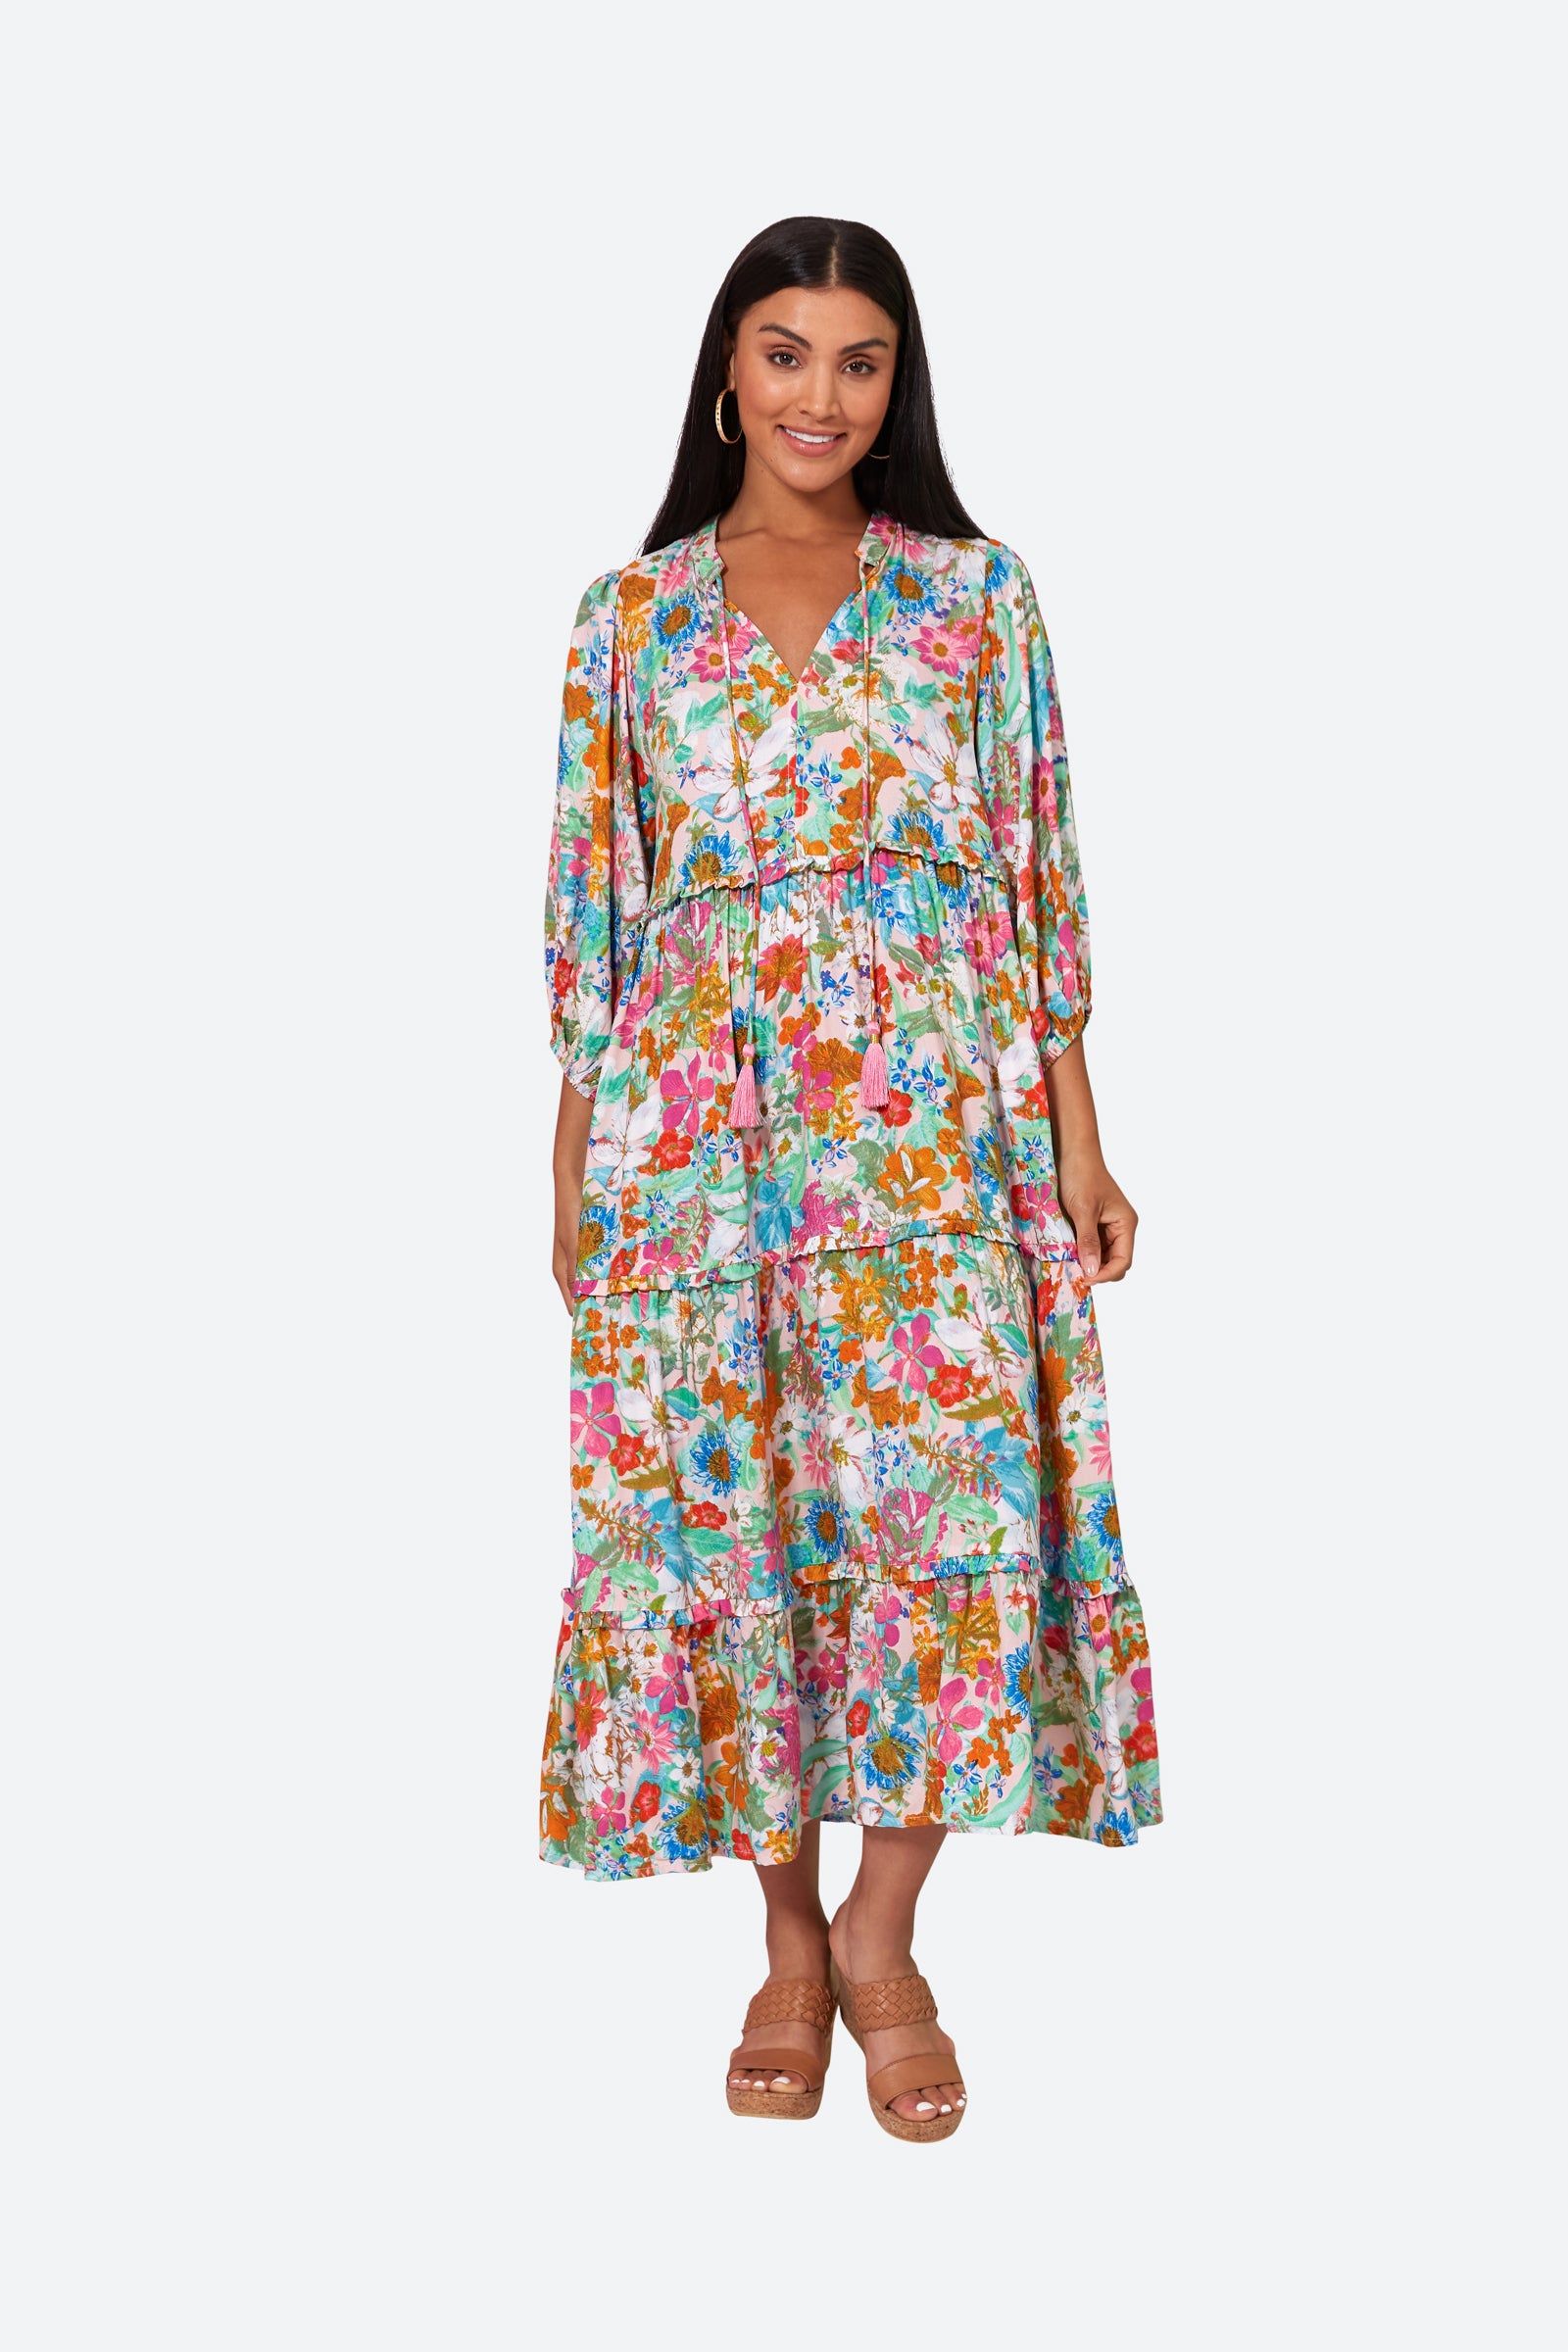 Esprit Tiered Dress - Pink Flourish - eb&ive Clothing - Dress 3/4 Length Linen